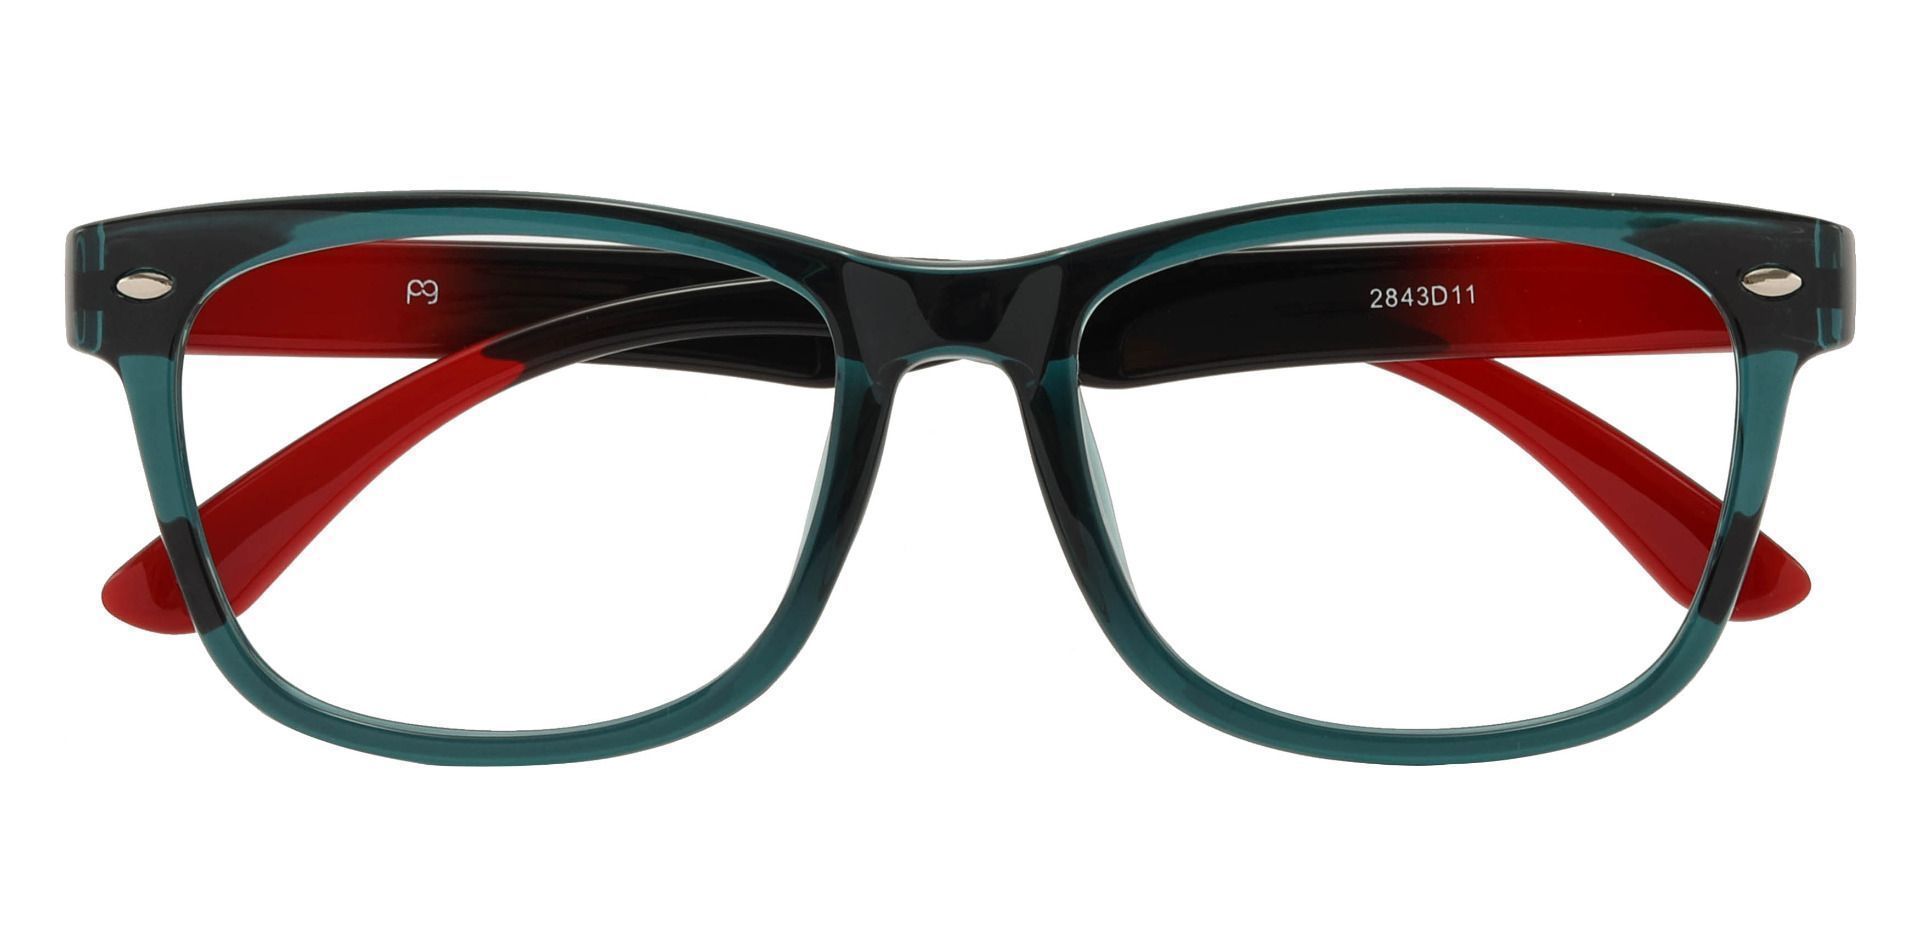 Oscar Rectangle Progressive Glasses - Green